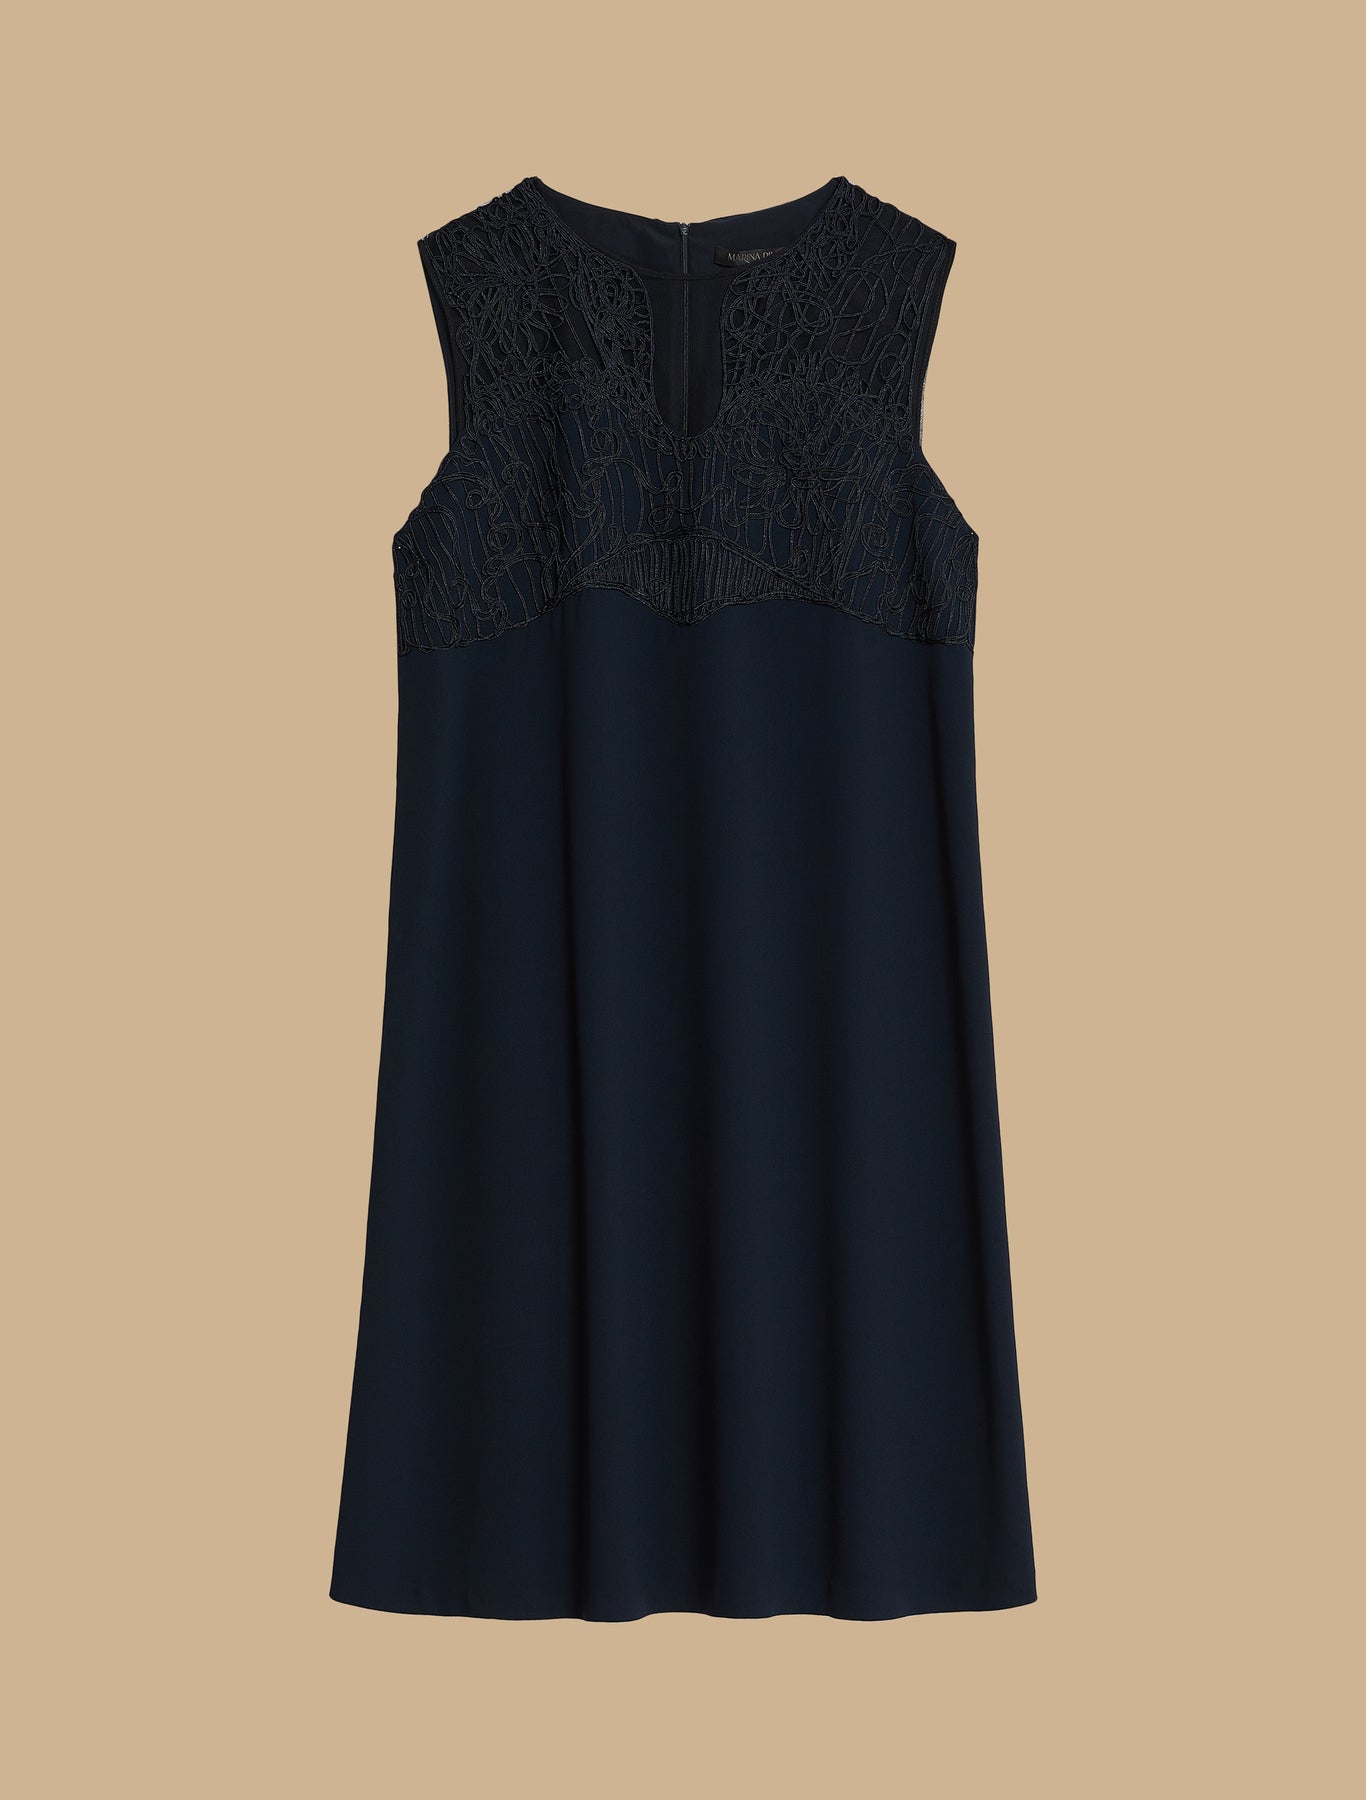 Marina Rinaldi Gigante Embroidered Dress  in Midnight Blue